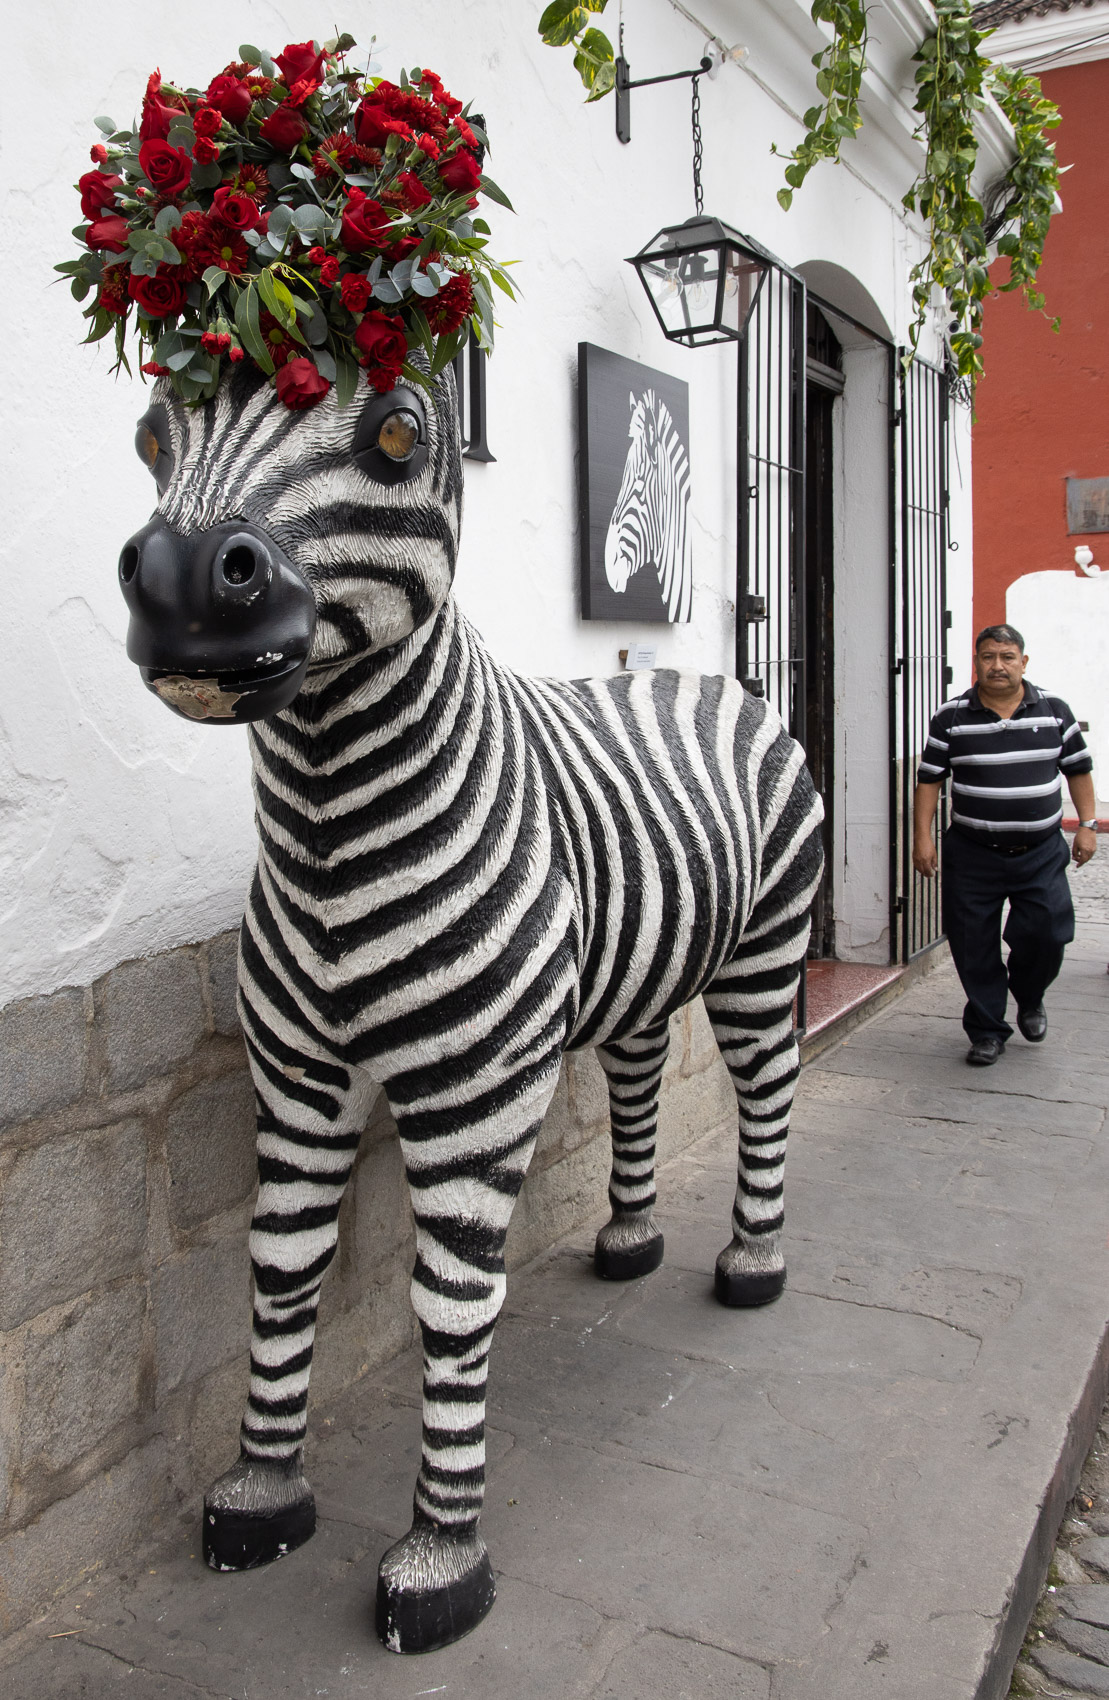 Guatemala-Antigua-Flower-Festival-Zebra